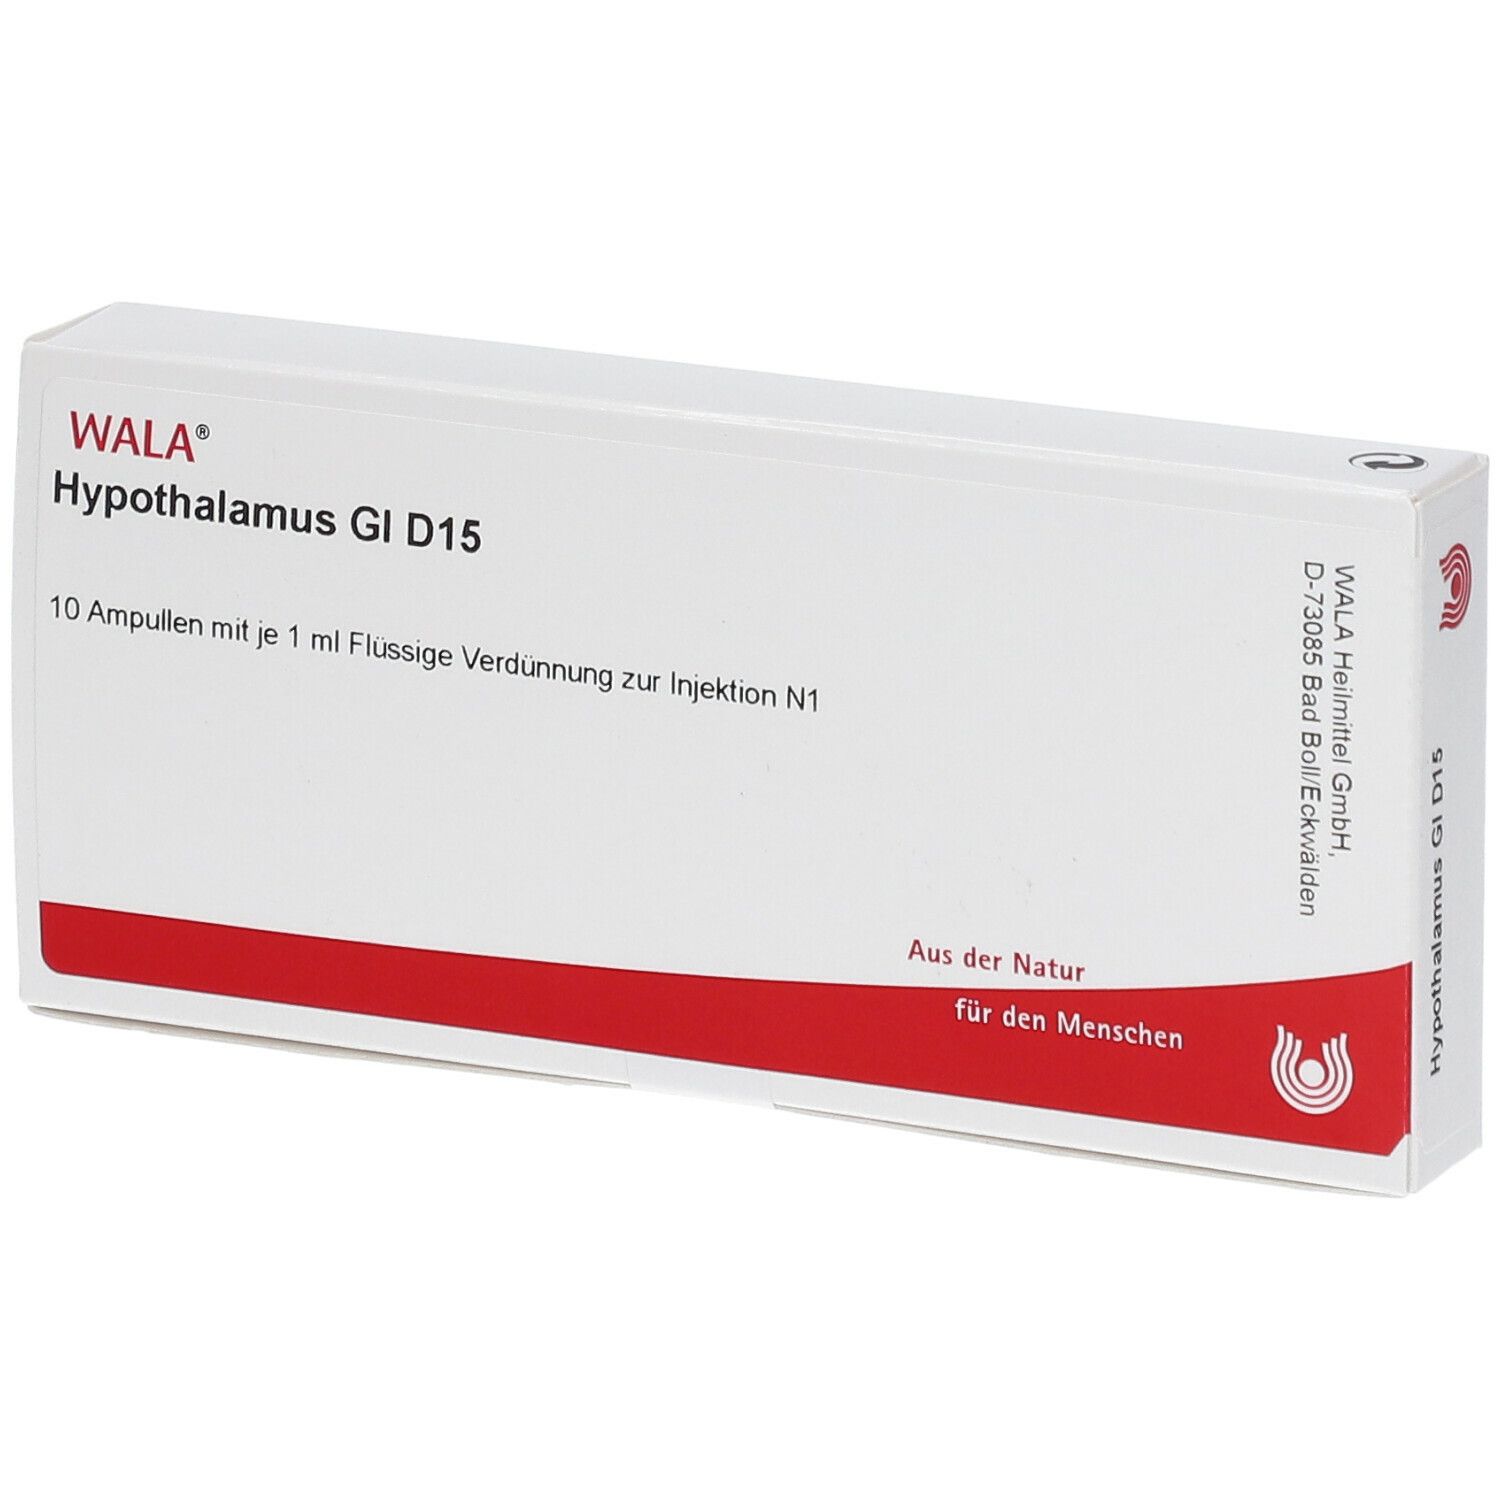 Wala® Hypothalamus Gl D 15